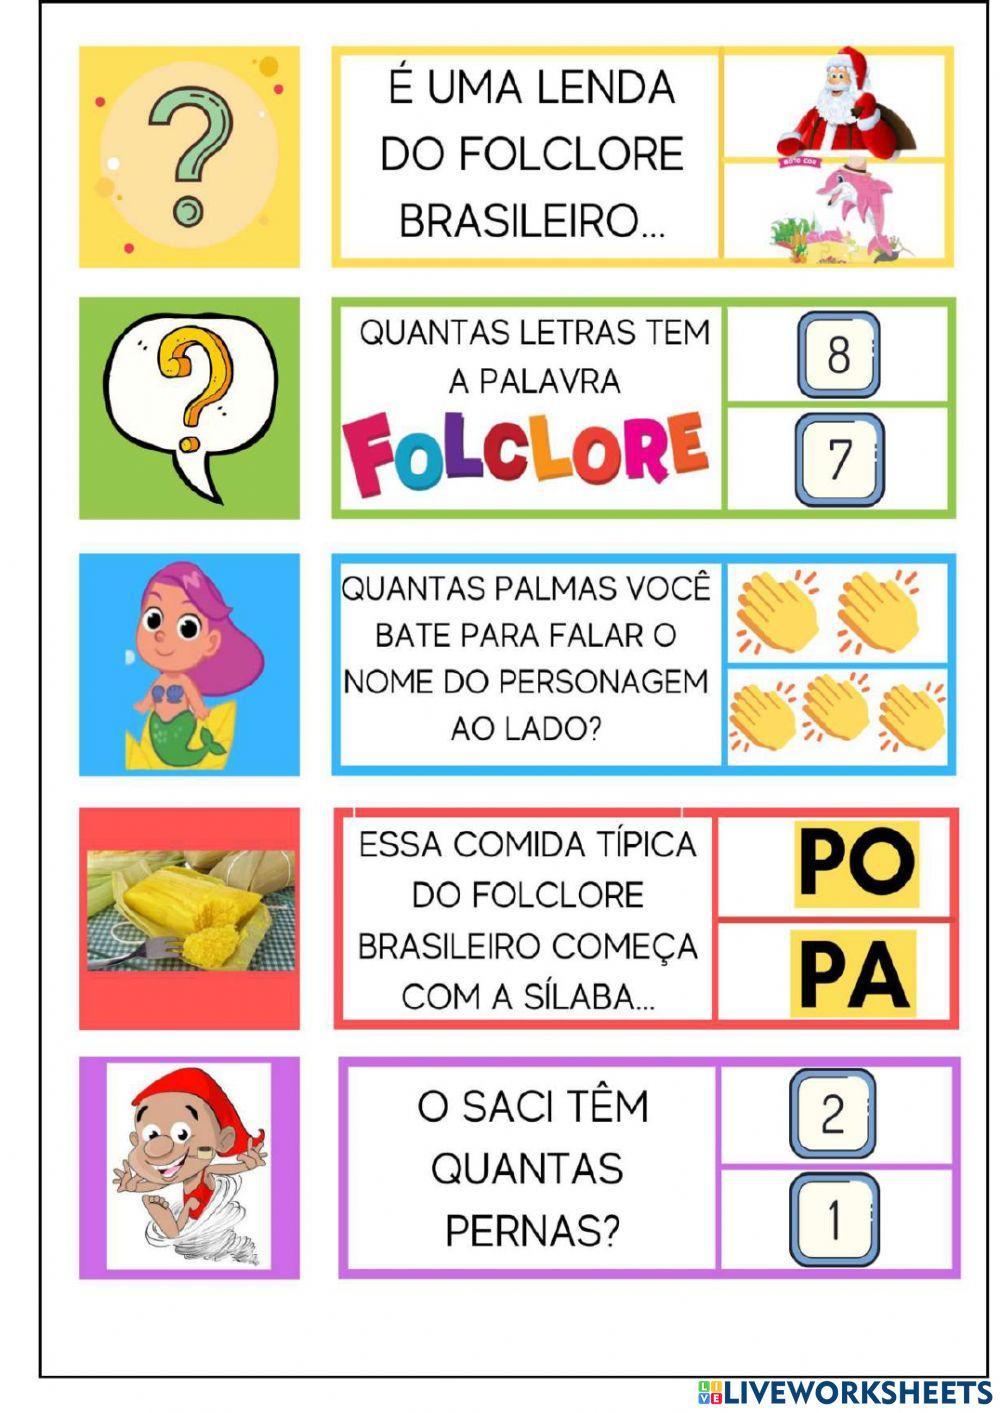 Quiz - CAMPEONATO BRASILEIRO 